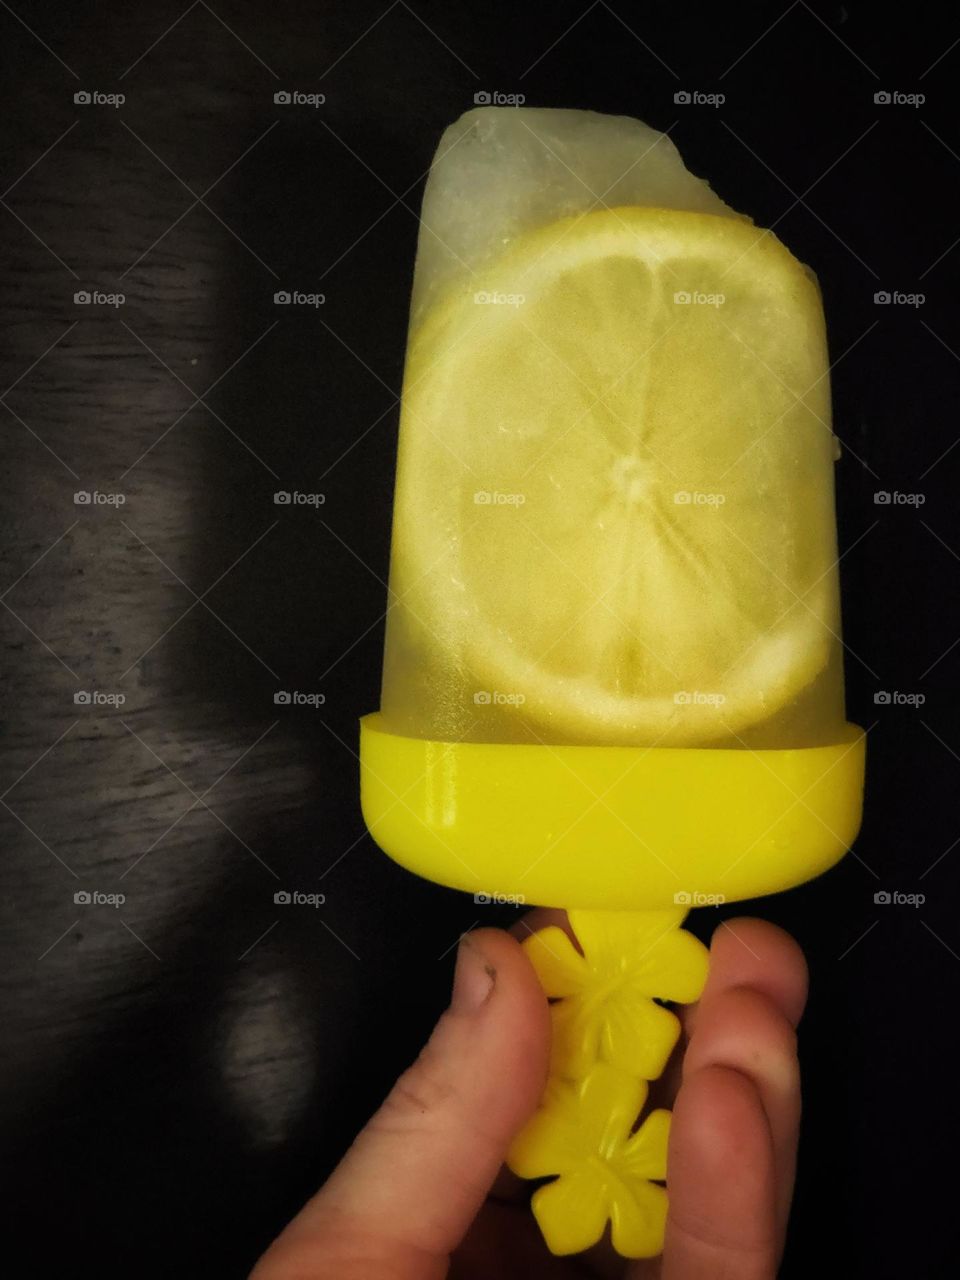 Enjoying a homemade lemonade popsicle.